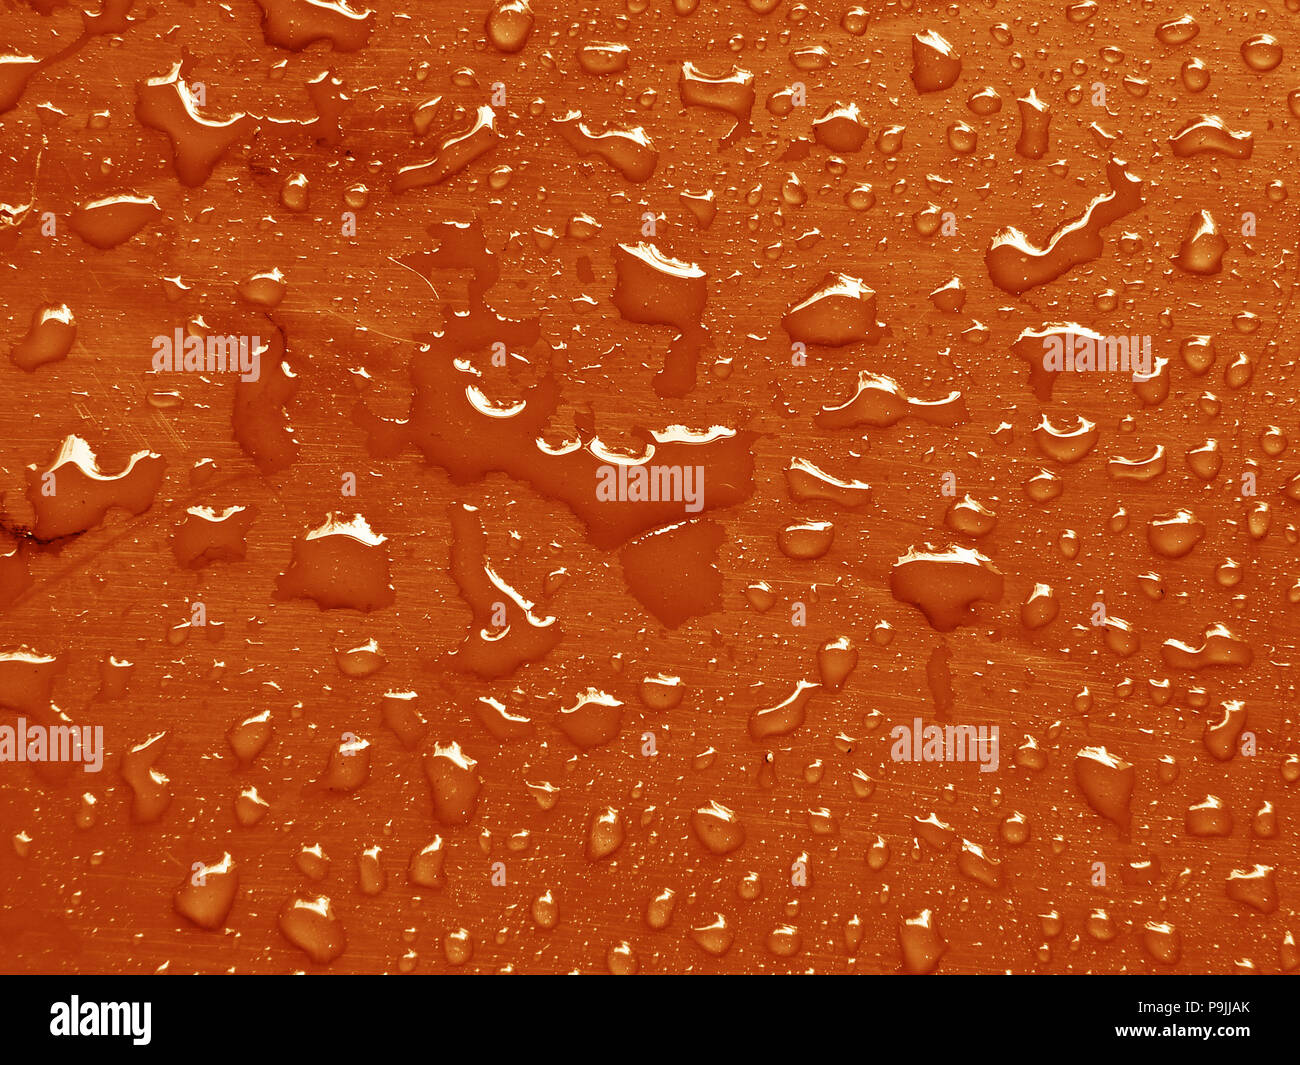 Gocce d'acqua sulla russet color arancio superficie metallica Foto Stock